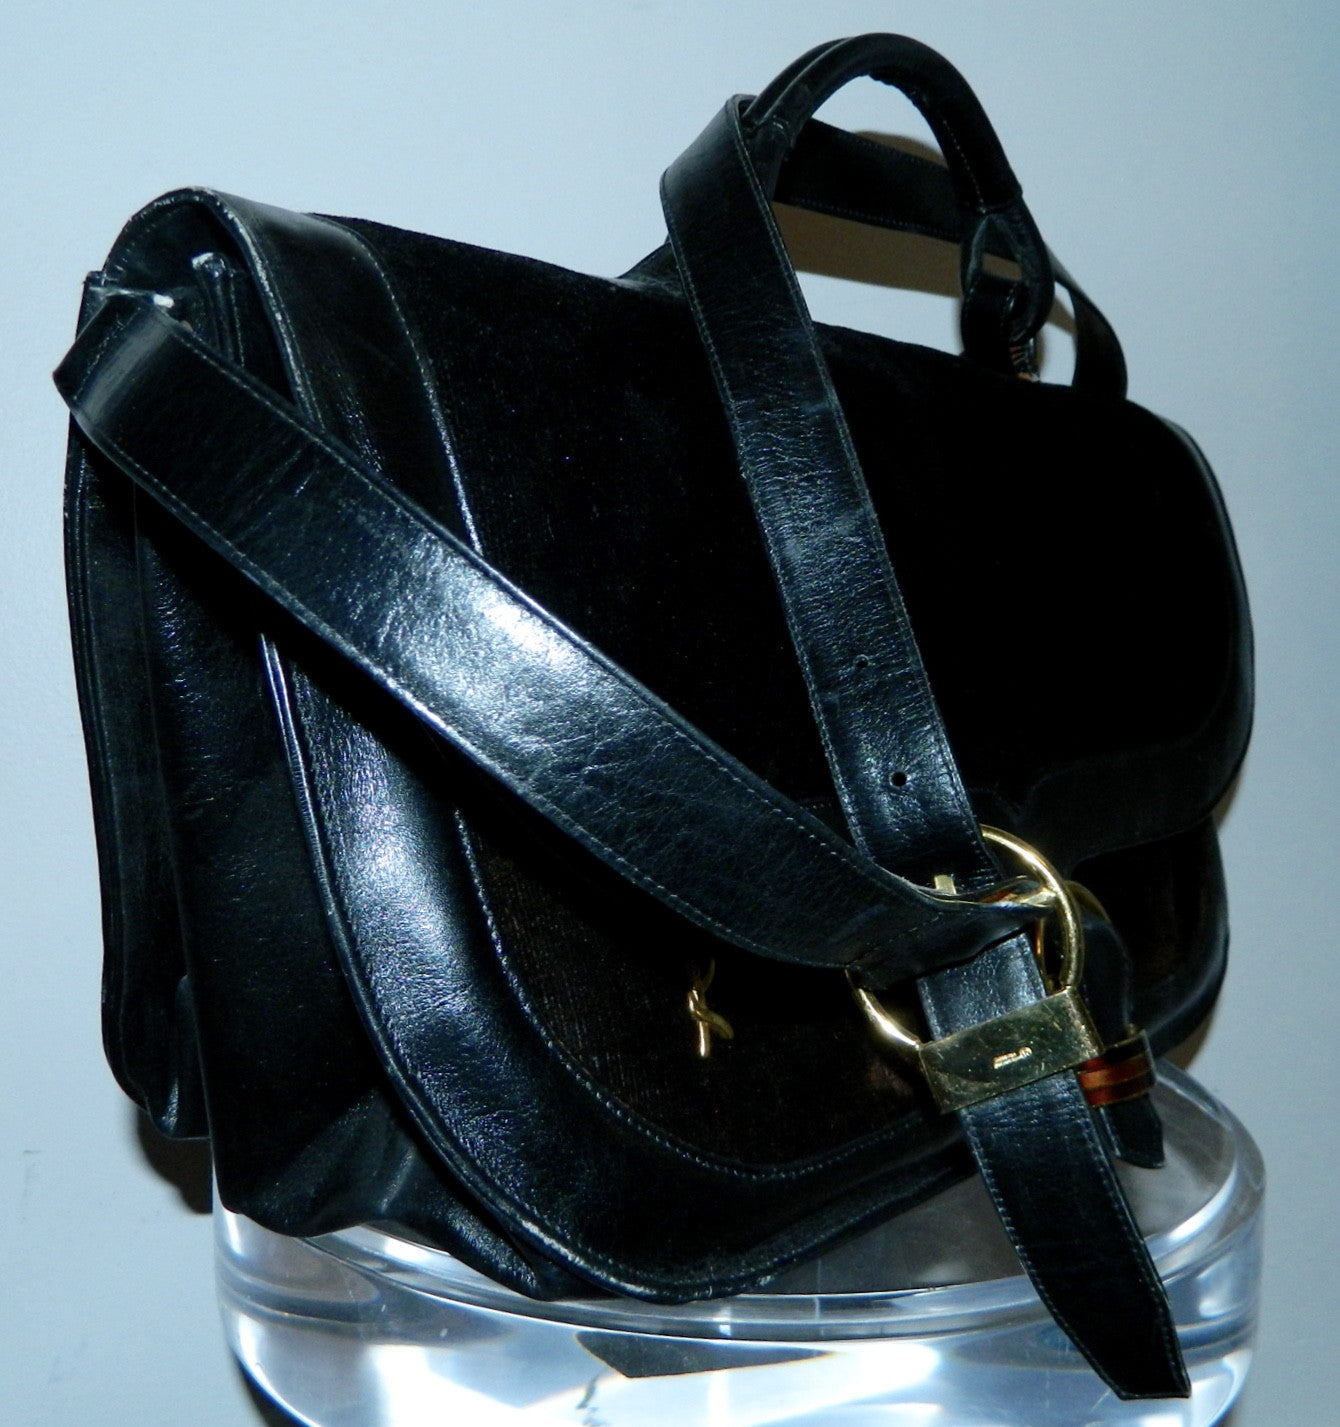 HUGE velvet leather Roberta di Camerino briefcase handbag vintage 1970s carry on bag